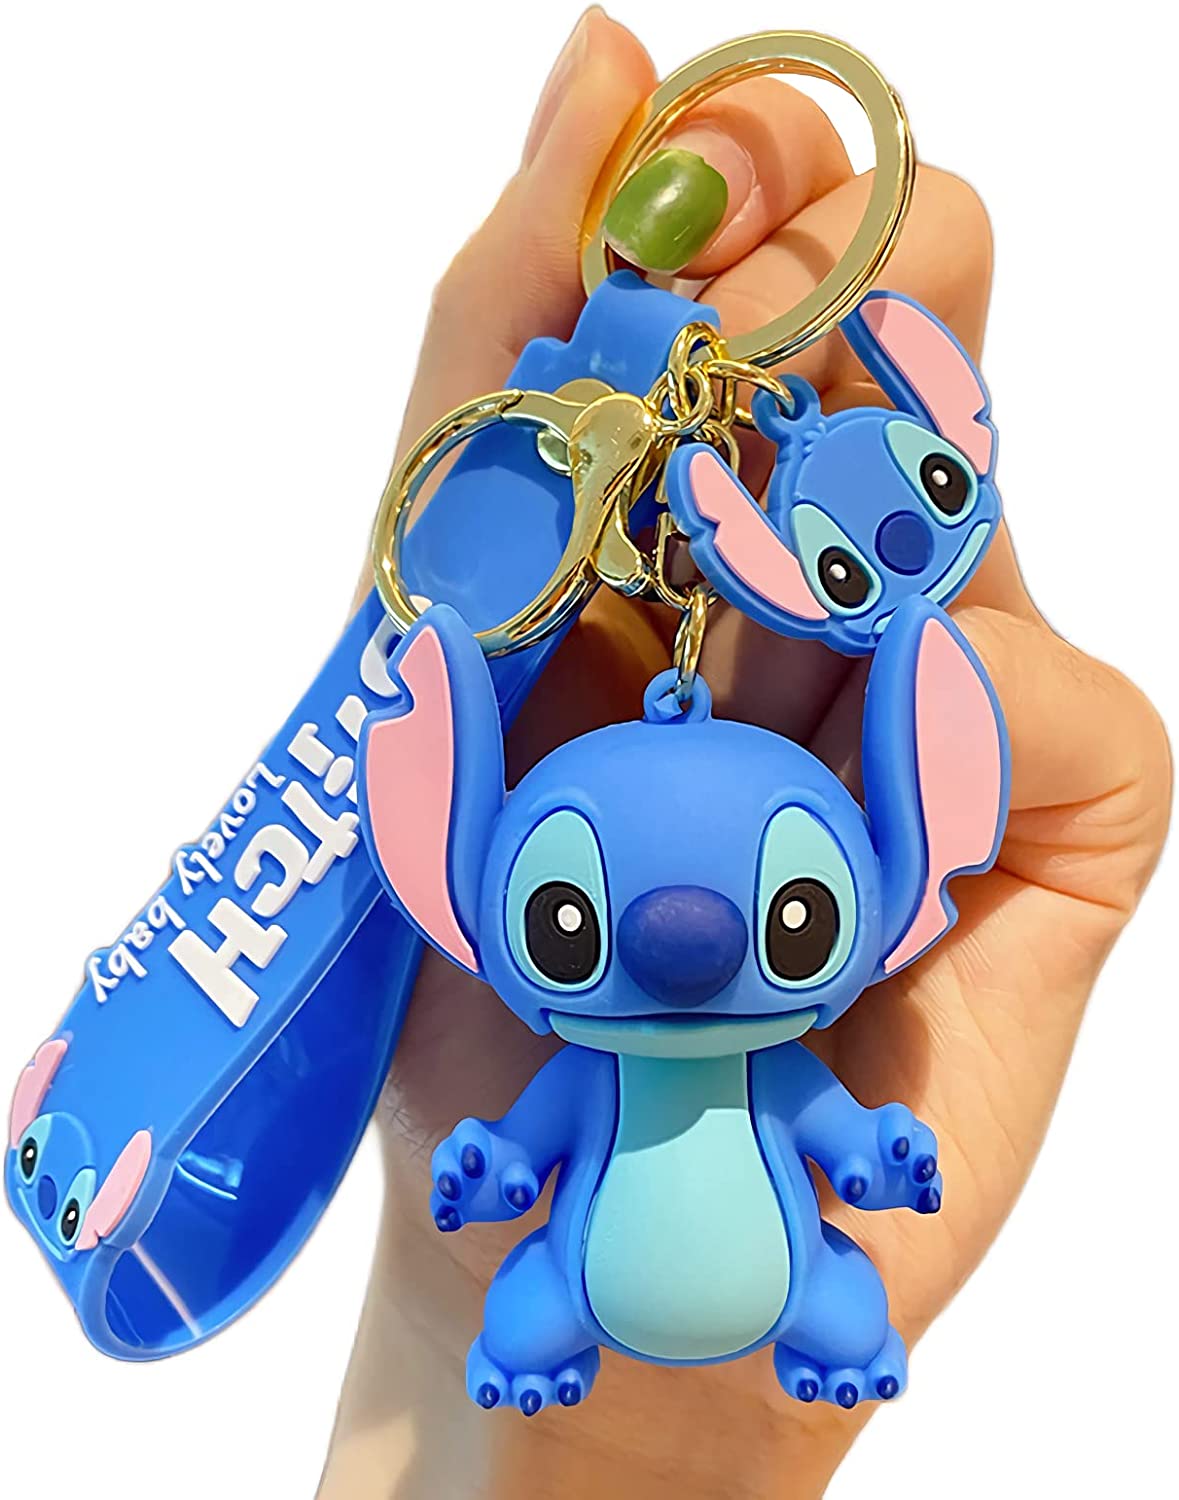 HTPARY 2pcs Stitch Keychain for Kids, Cute Key Chains Cartoon Stitch Keyring Gift for Girls Boys, Keychains for Keys Backpack Bag Birthday Christmas